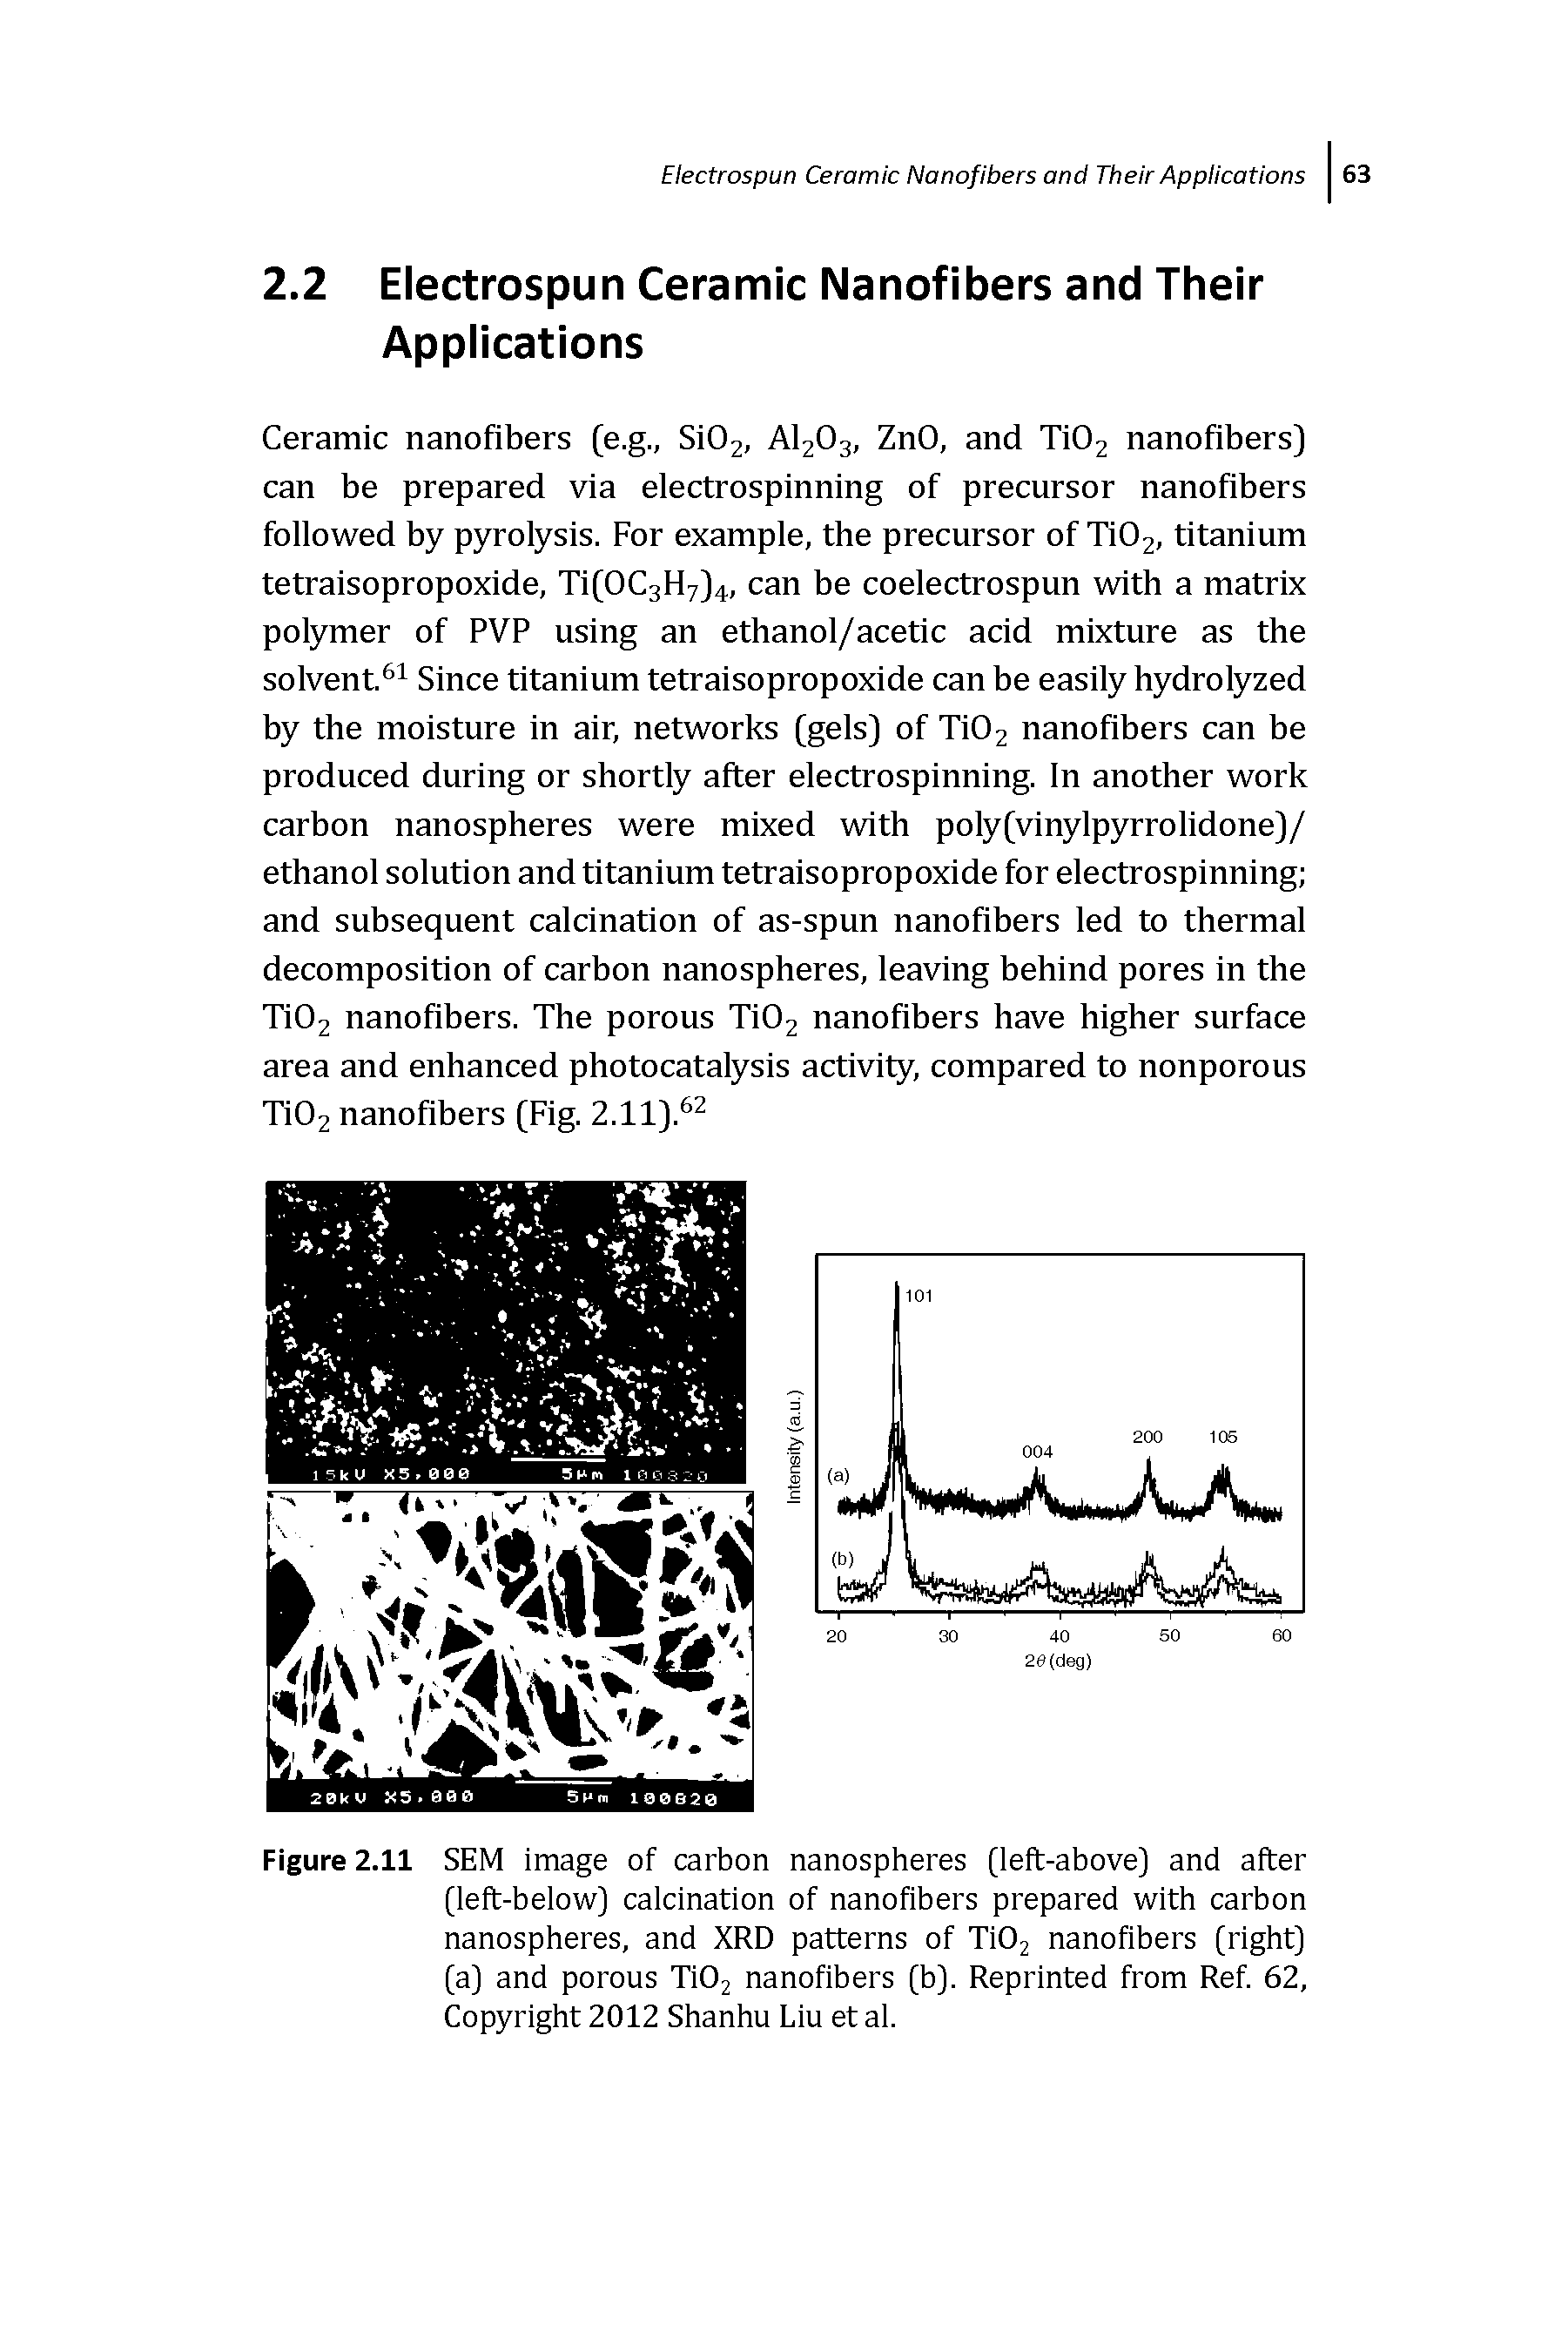 Figure 2.11 SEM image of carbon nanospheres (left-above] and after (left-below] calcination of nanofibers prepared with carbon nanospheres, and XRD patterns of TiOj nanofibers (right] (a] and porous TiOj nanofibers (b]. Reprinted from Ref. 62, Copyright 2012 Shanhu Liu et al.